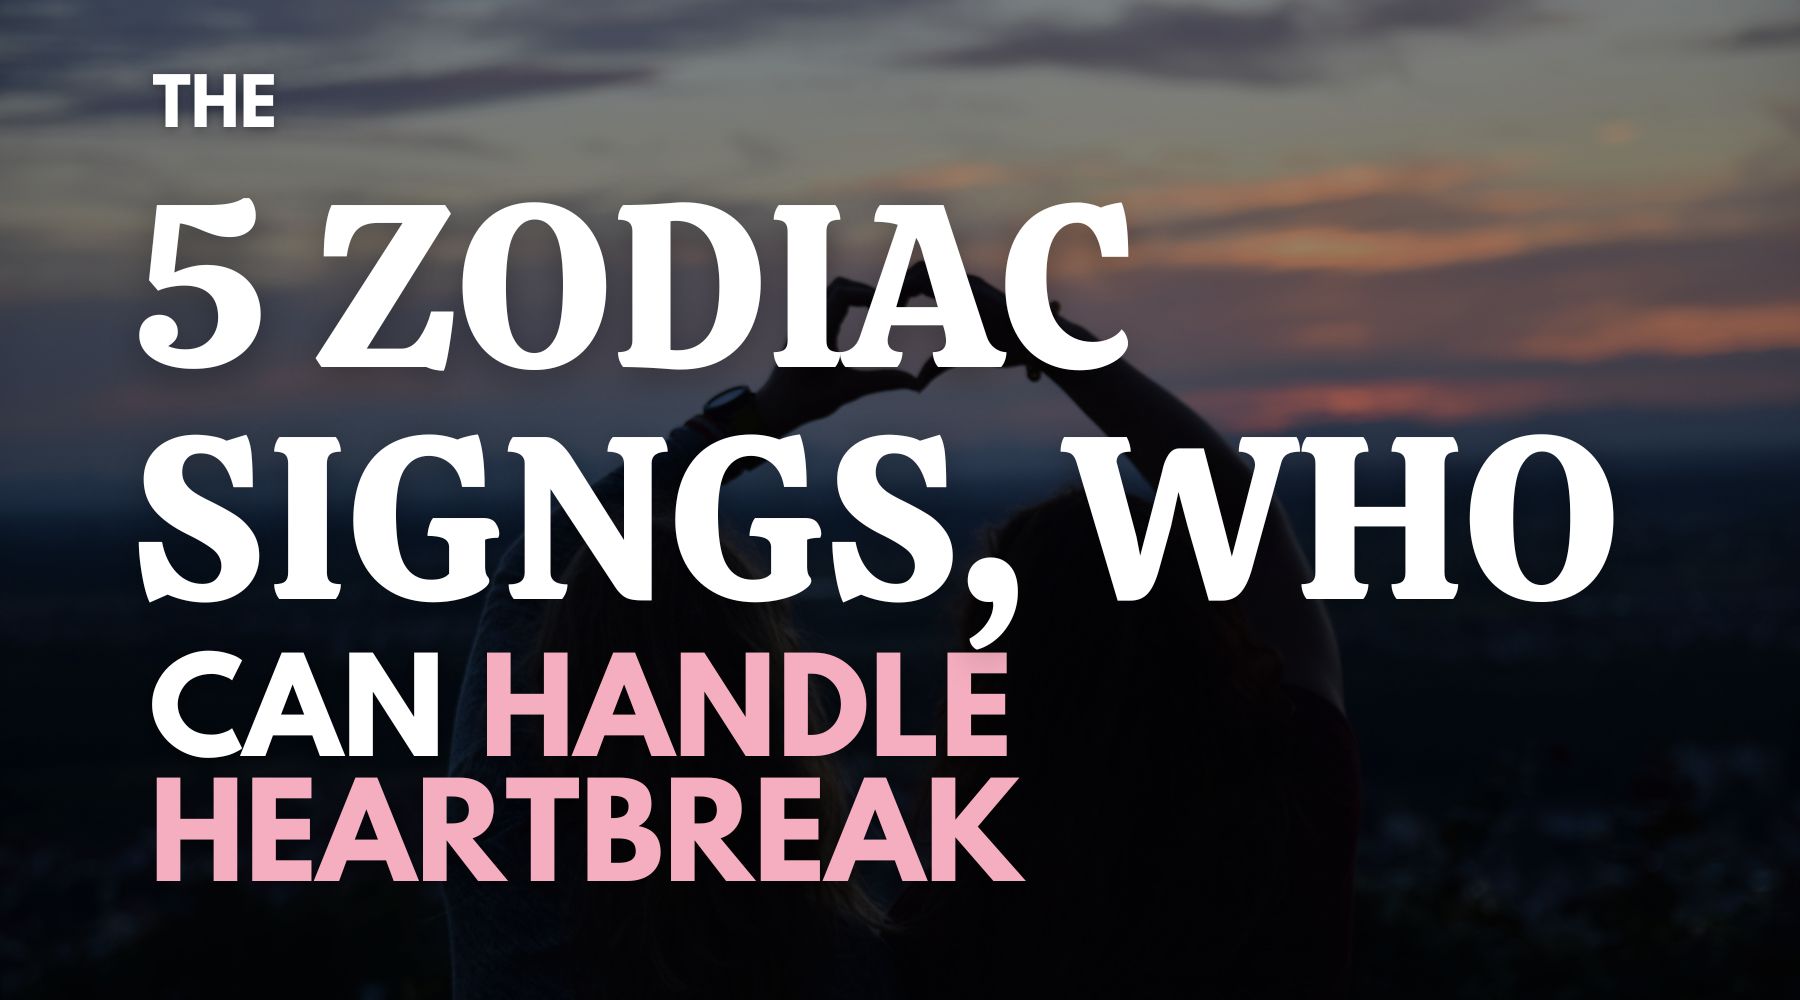 The 5 zodiac signs, who can handle heartbreak best